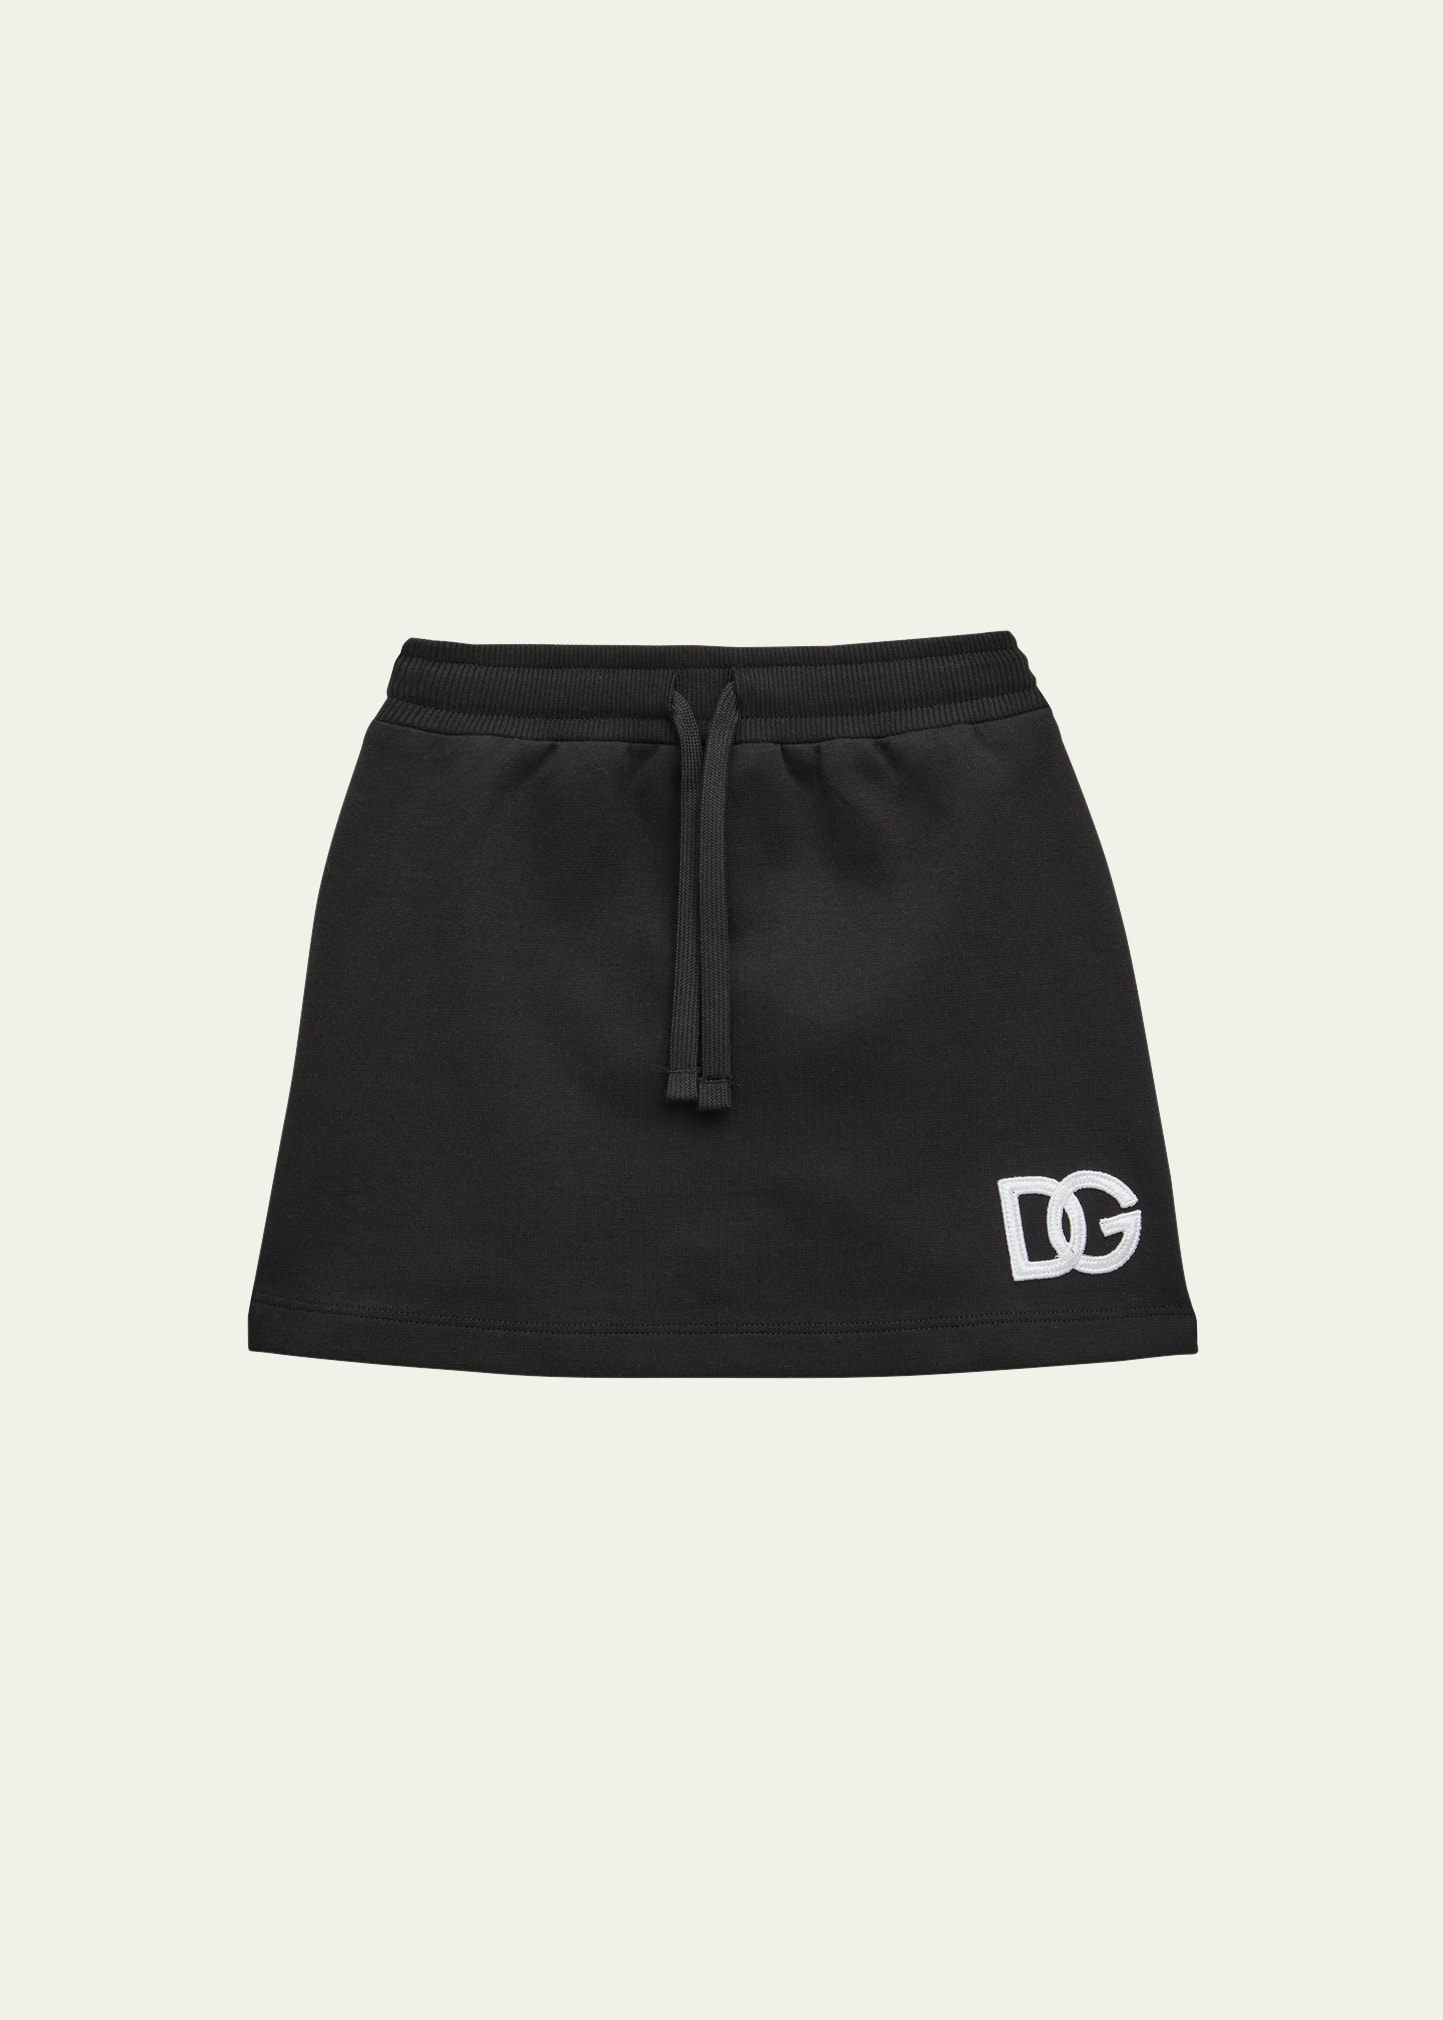 Dolce & Gabbana Kids' Girl's Embroidered Logo Sweat Skirt In Black